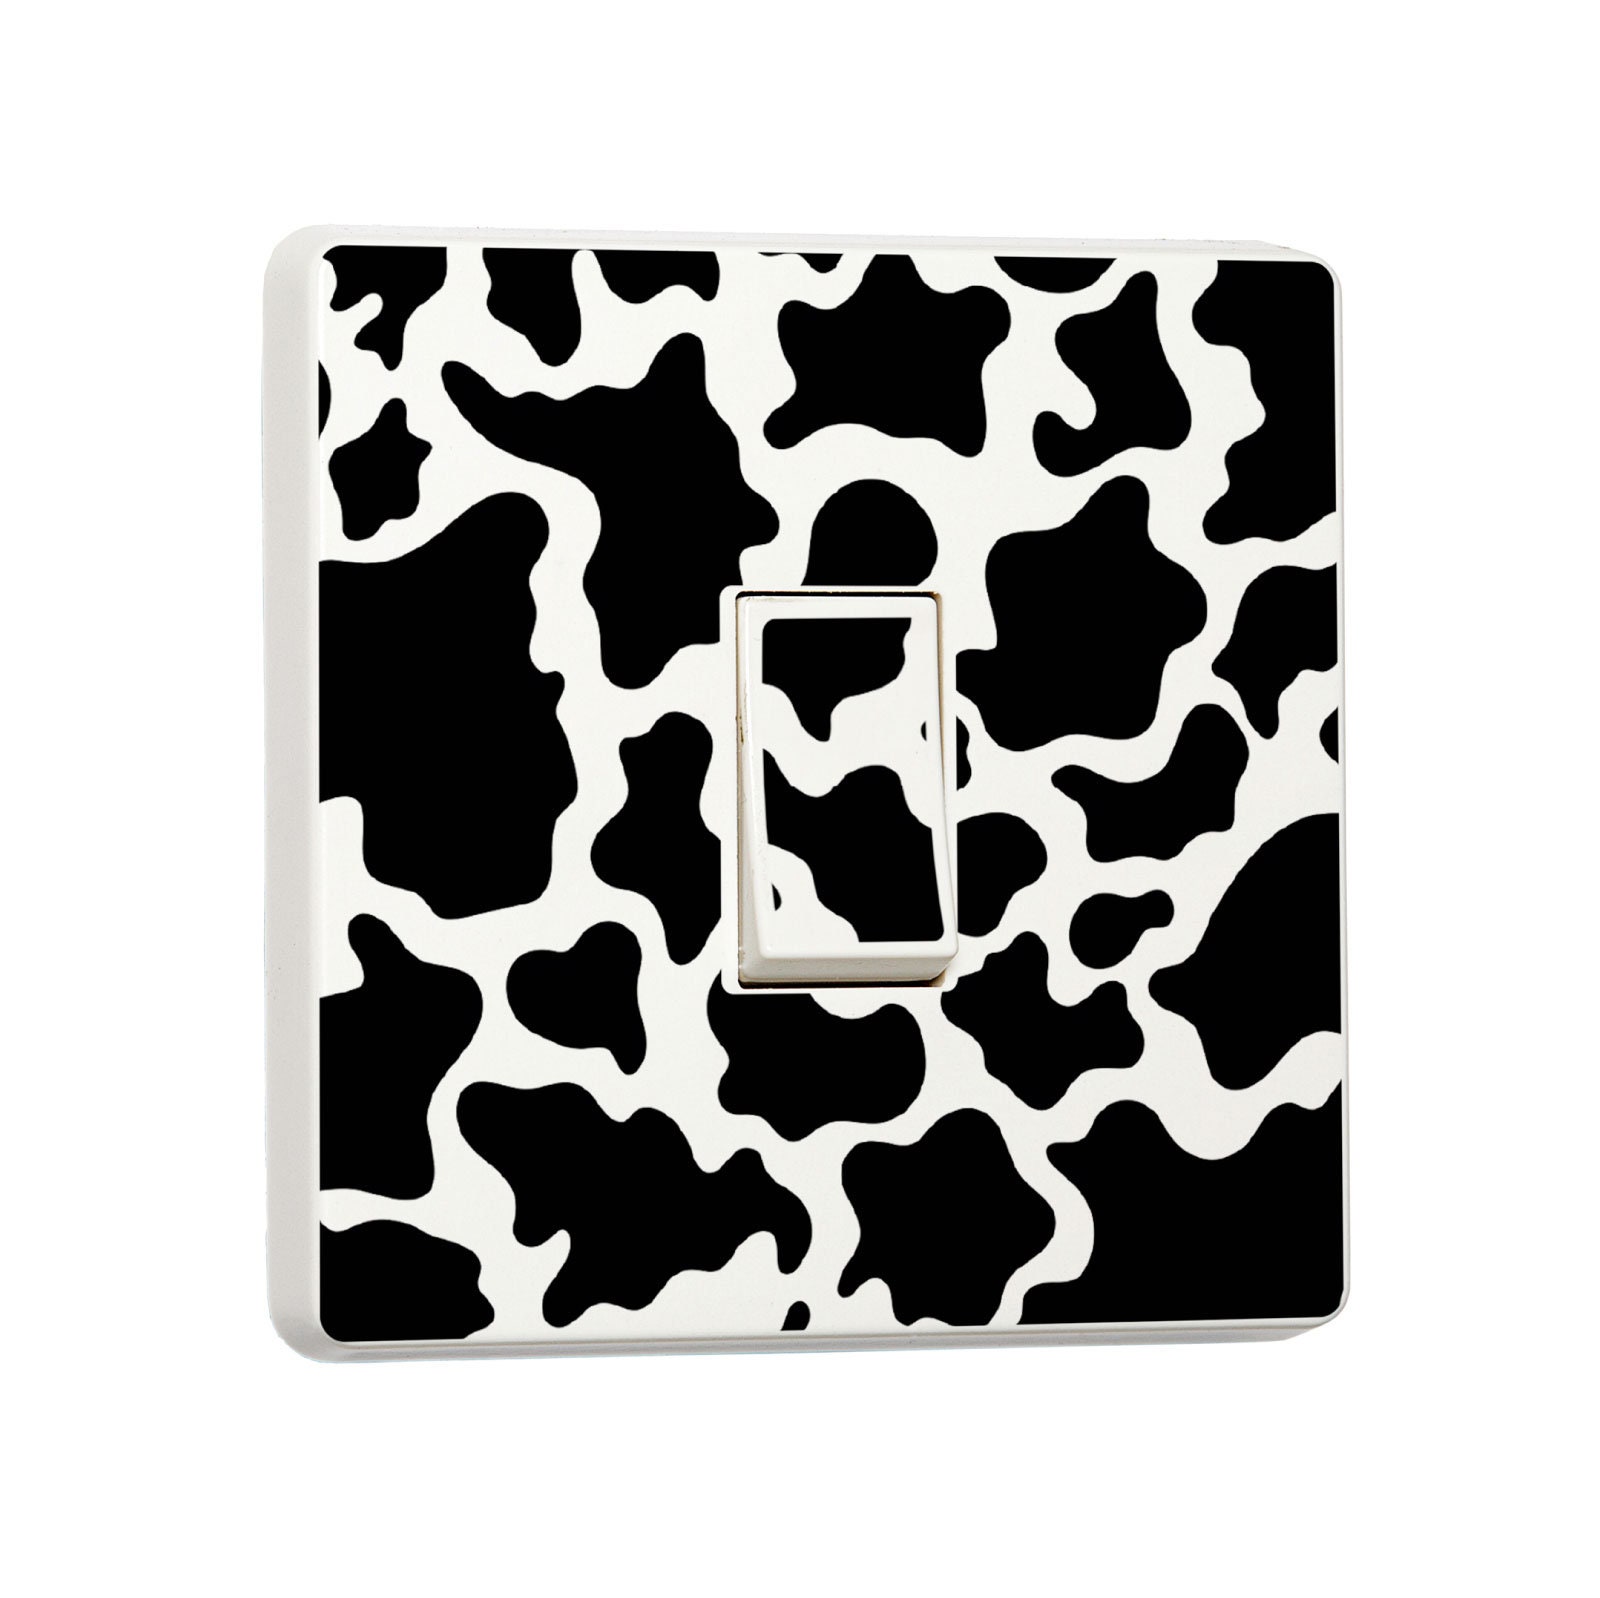 Cow Print Wall Stickers 142x Black Cow Spot Decals Animal Decor Girls  Bedroom Dot Spot Nursery Home Decor Removable for Walls Door UK -  Hong  Kong